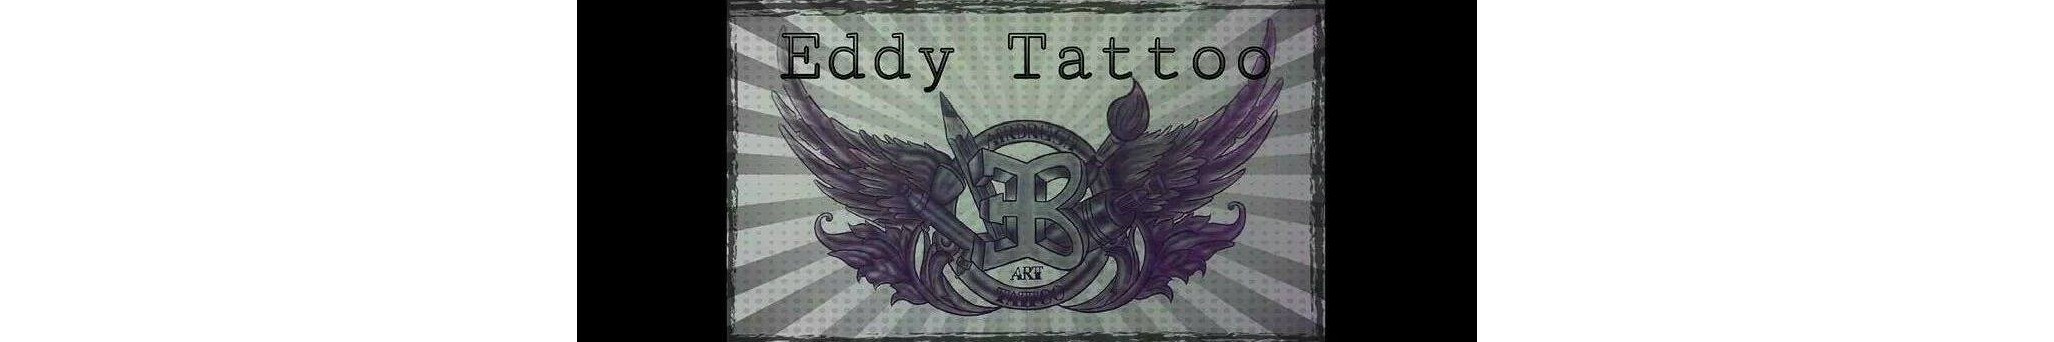 Eddy Tattoo - Estudio de Tatuaje Albox